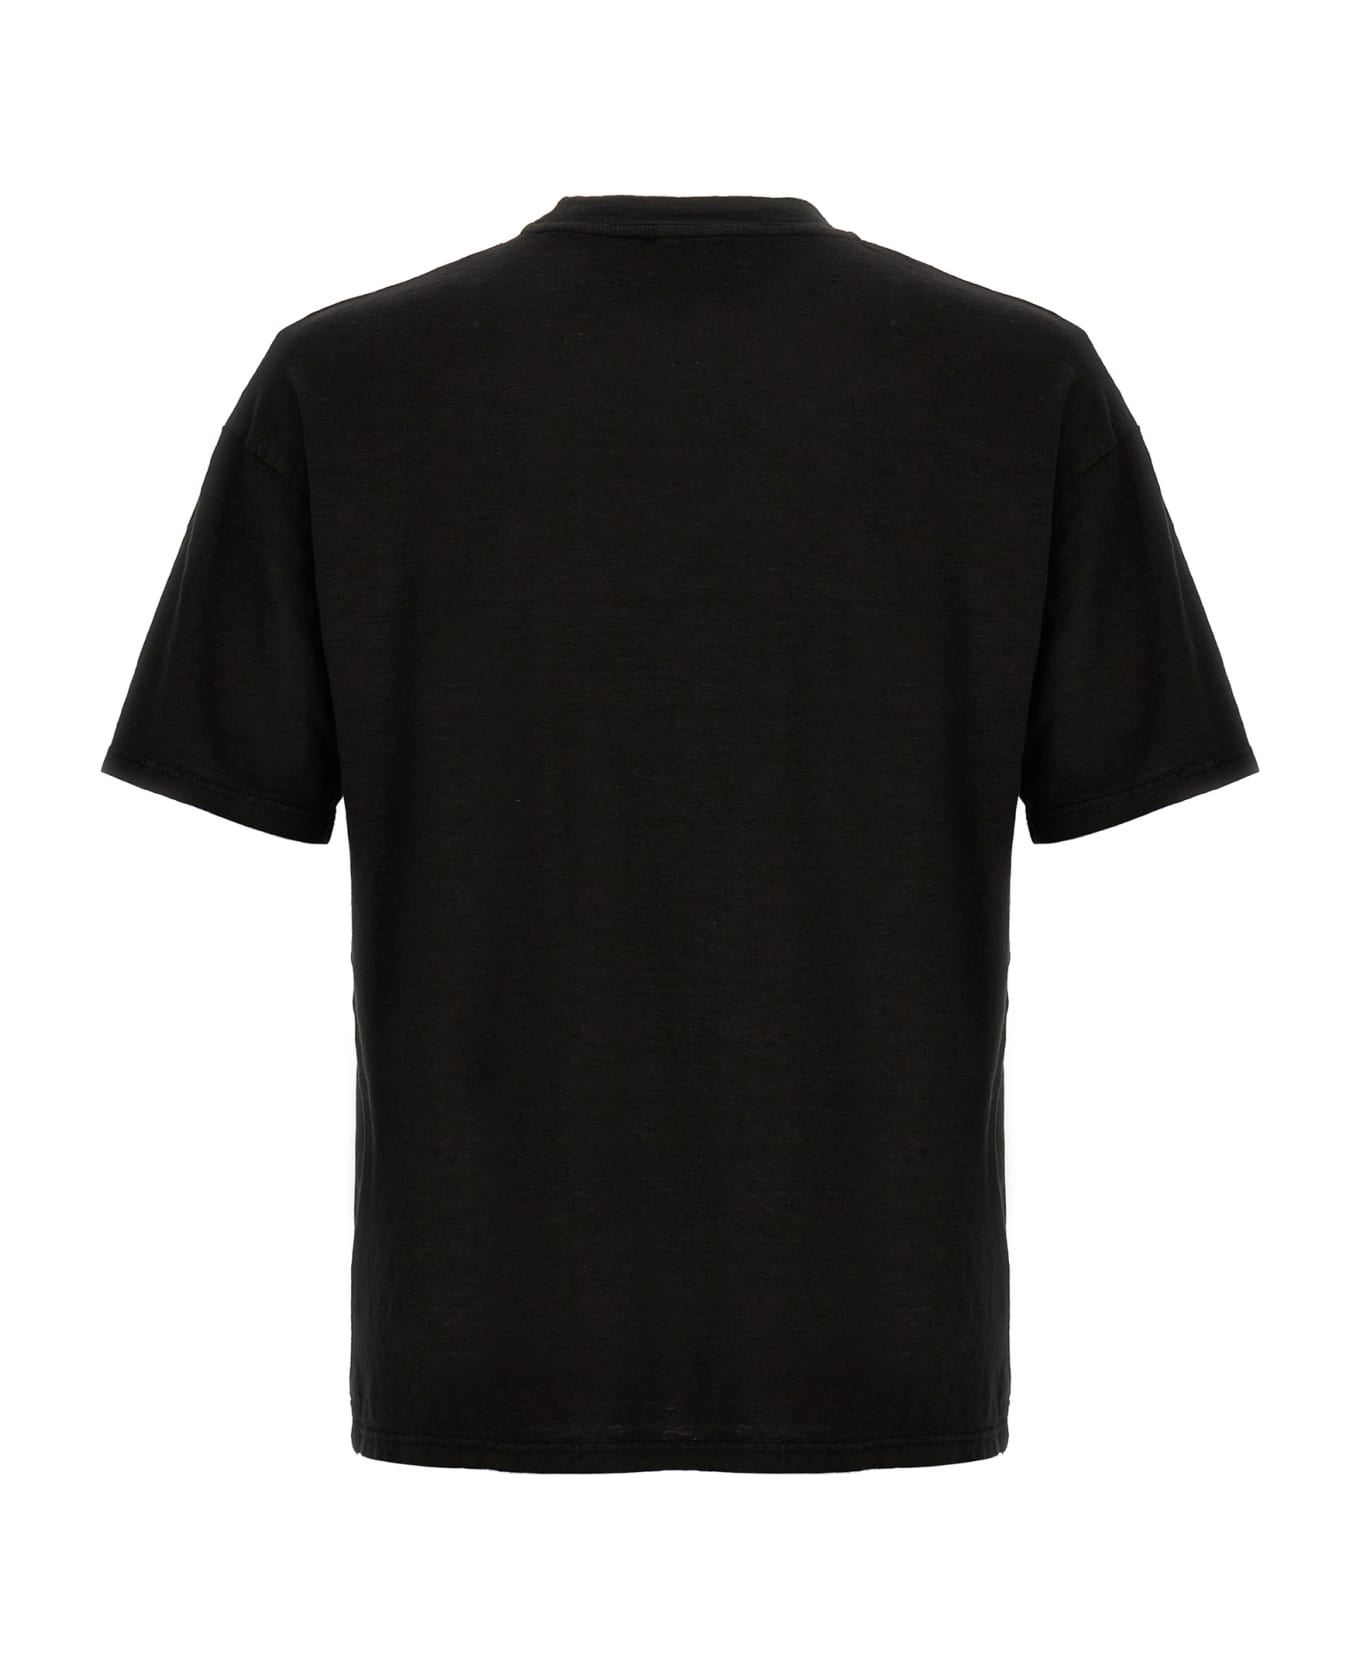 Ma'ry'ya Linen T-shirt - Black   シャツ